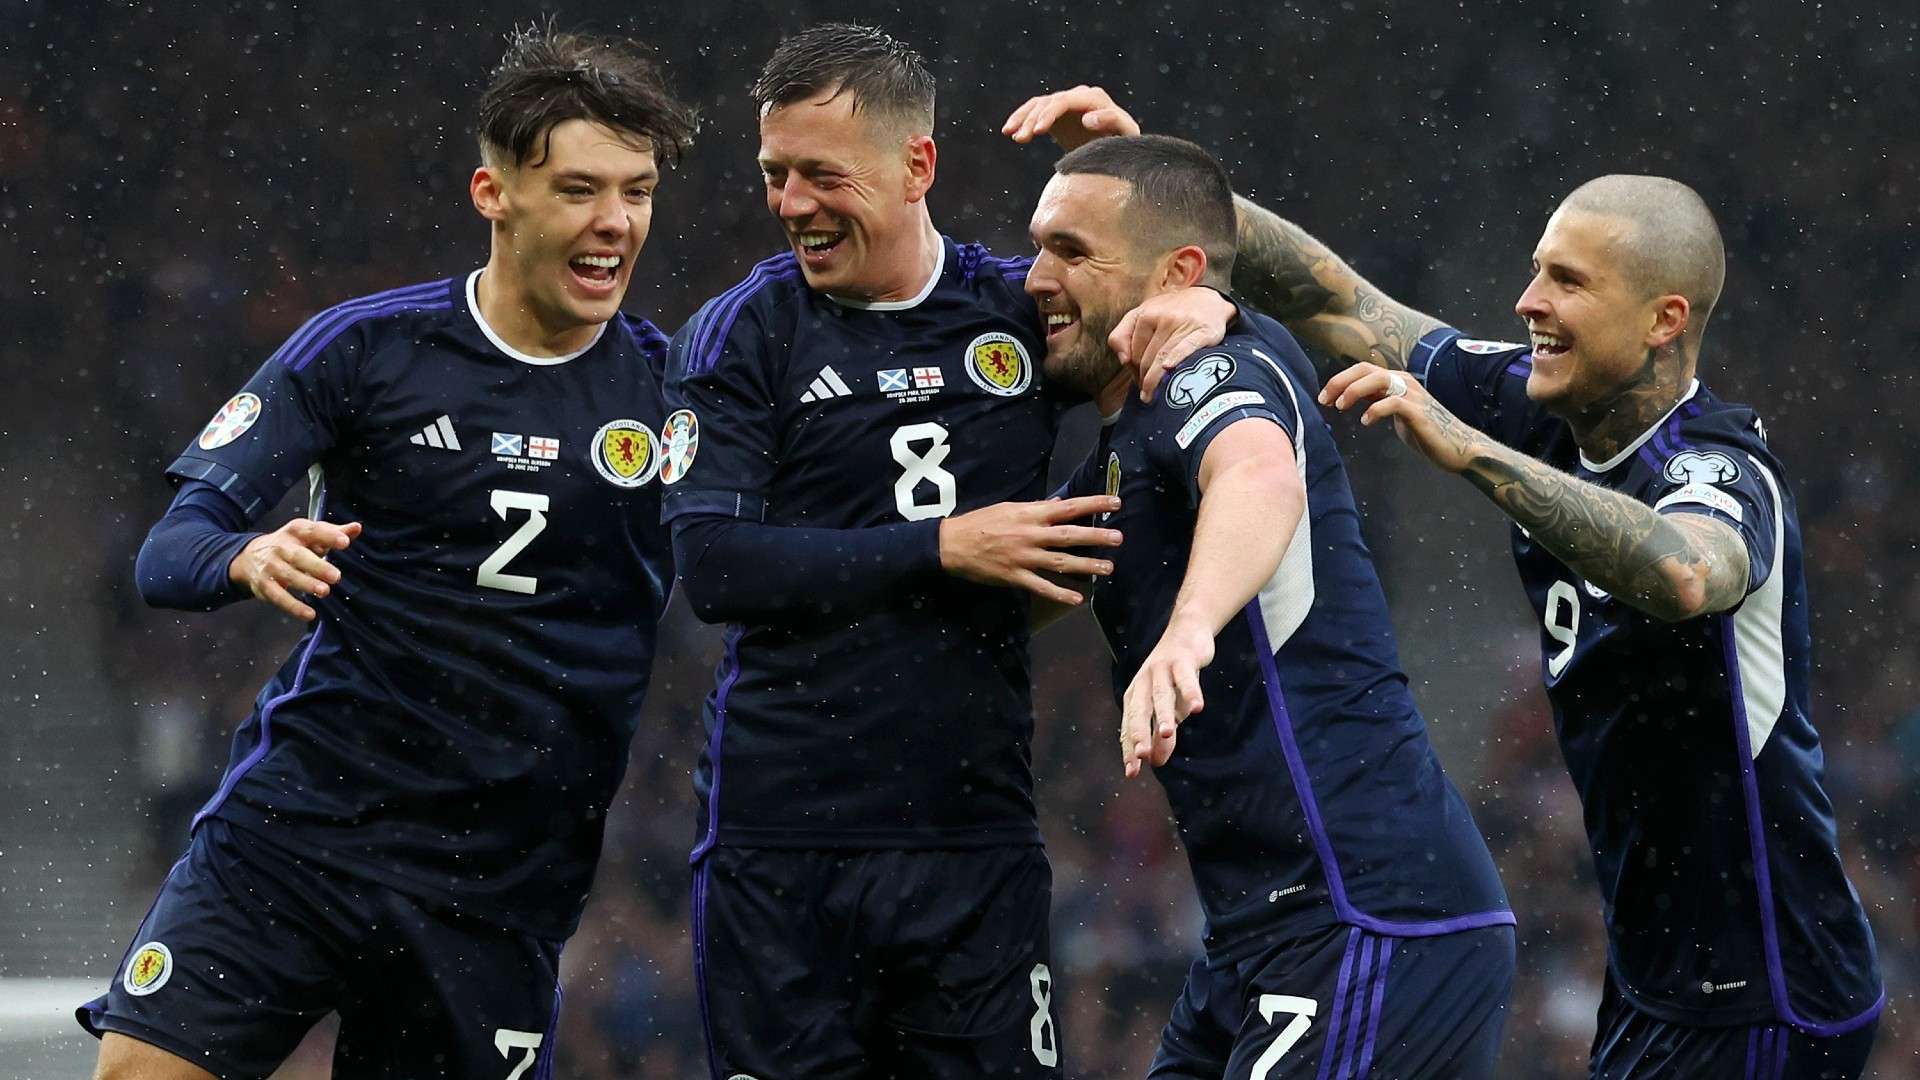 Scotland celebrate vs Georgia